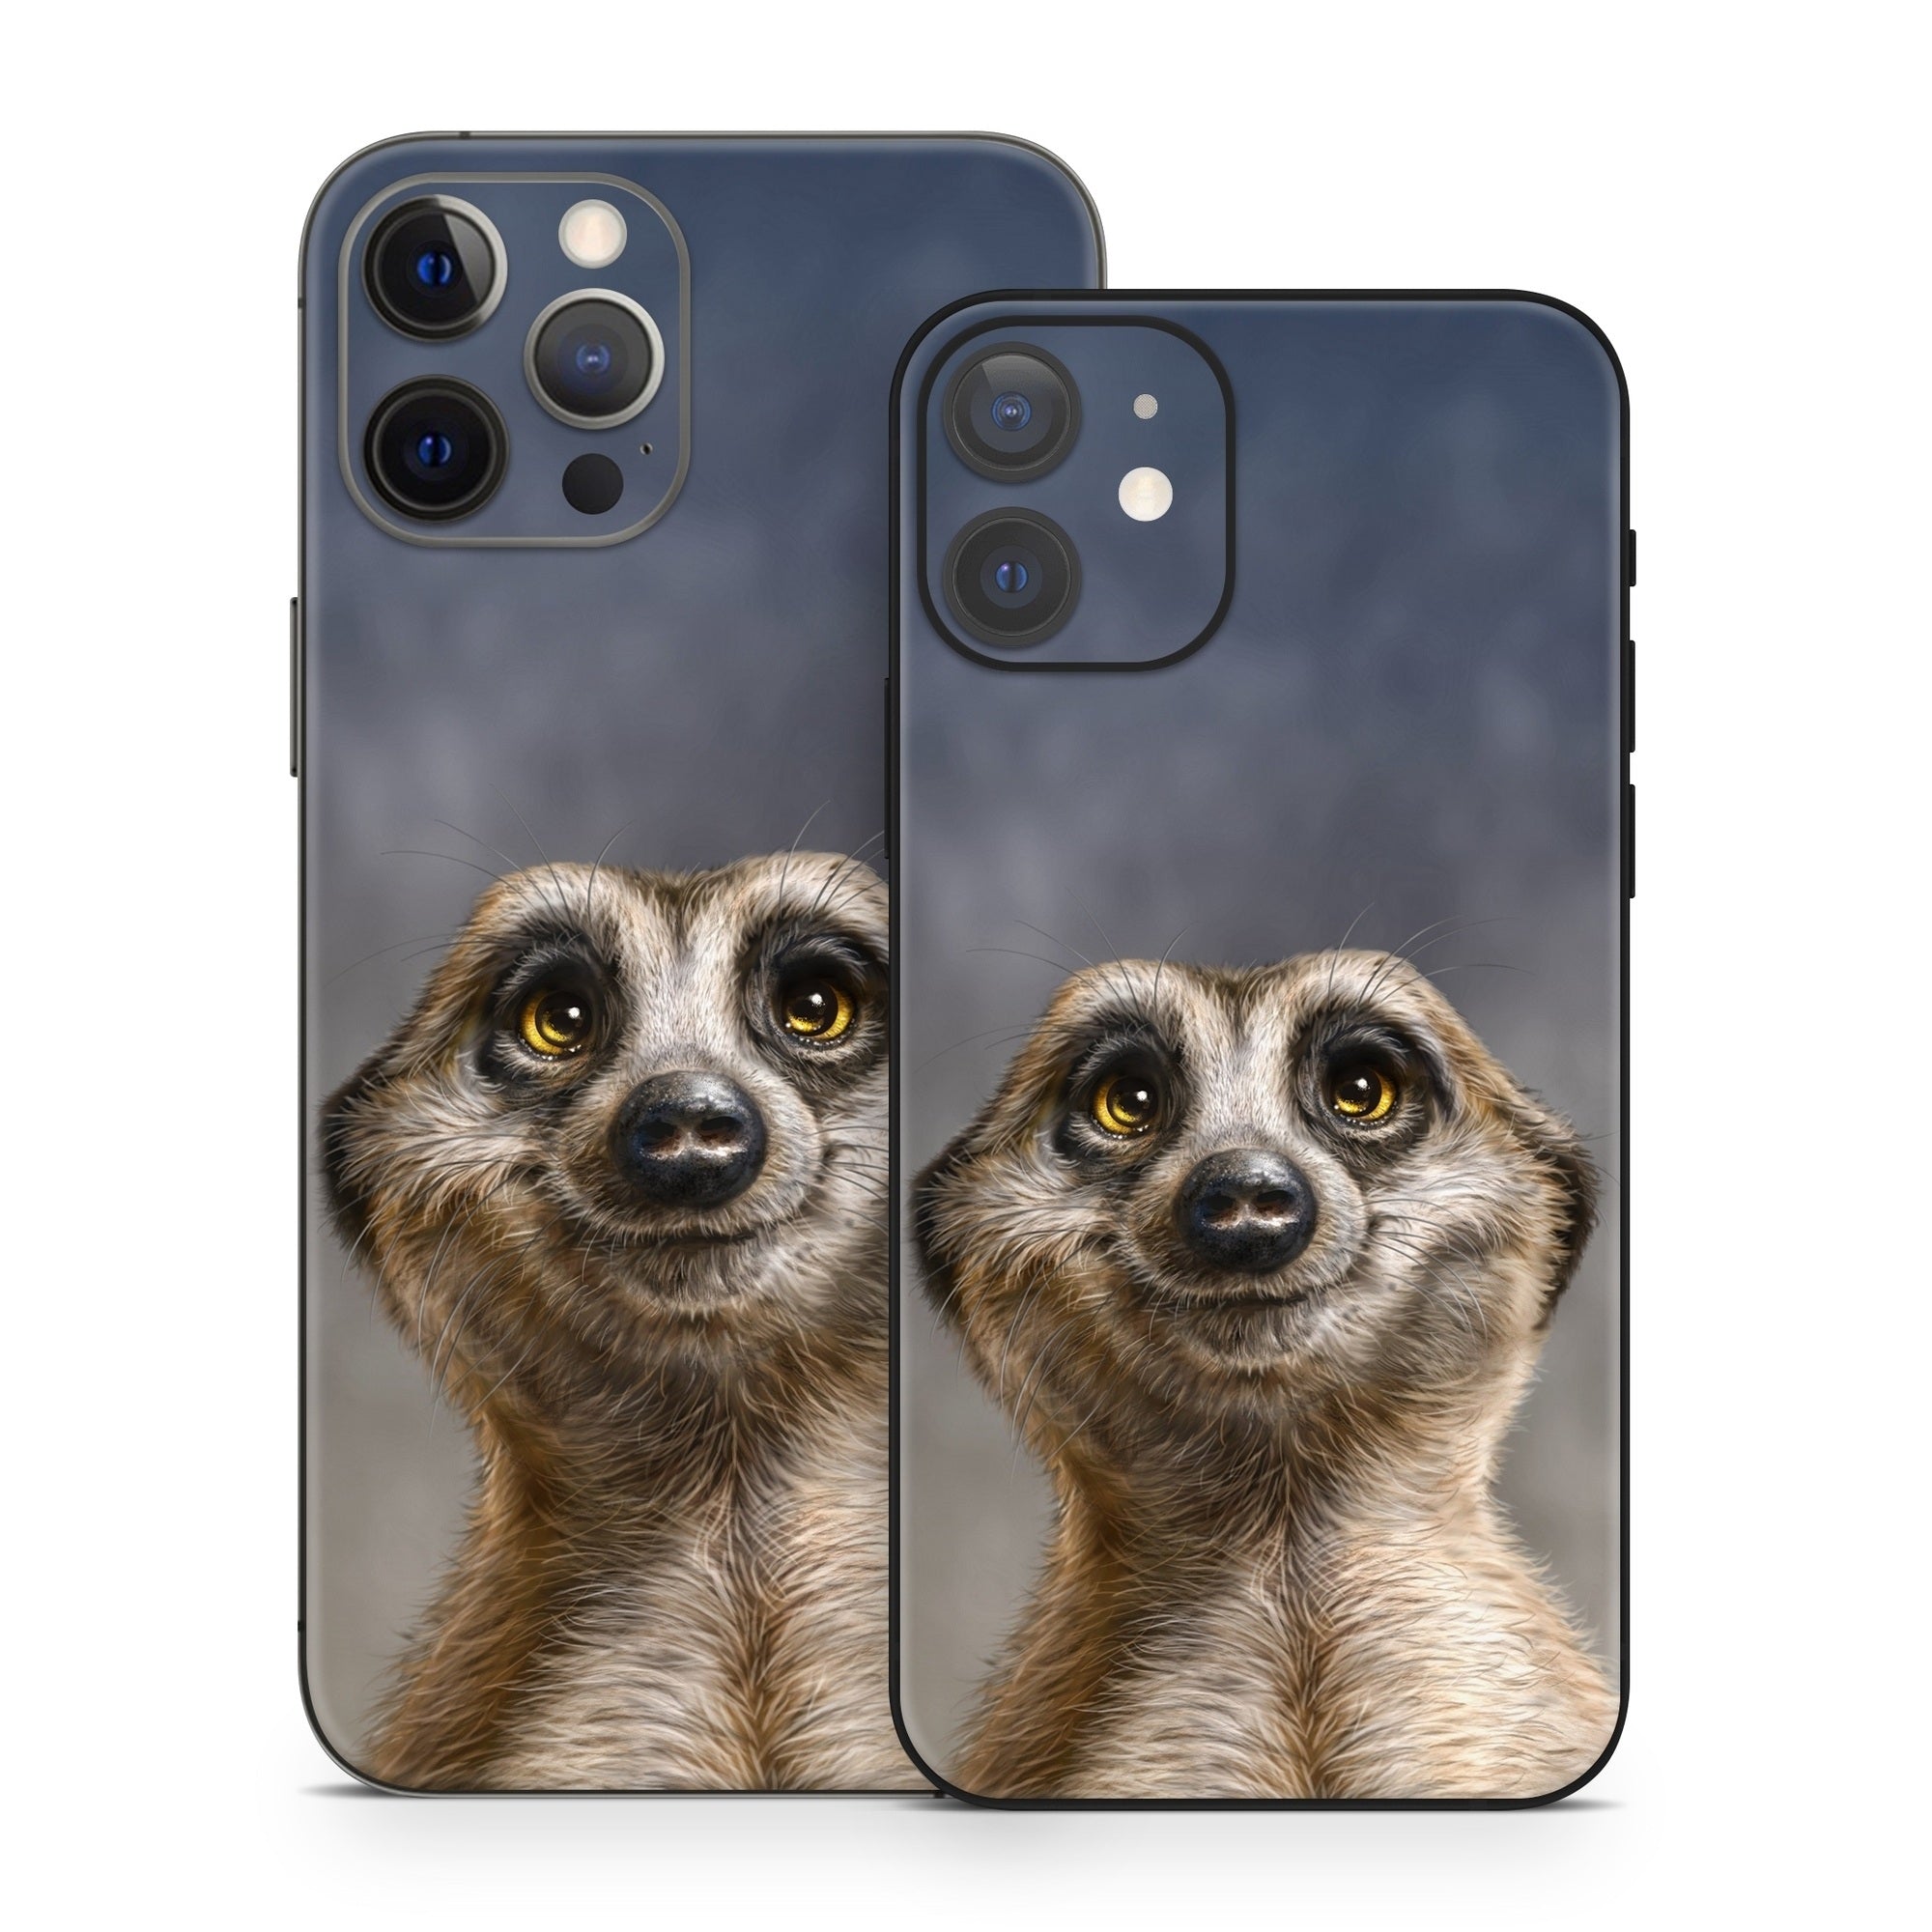 Meerkat - Apple iPhone 12 Skin